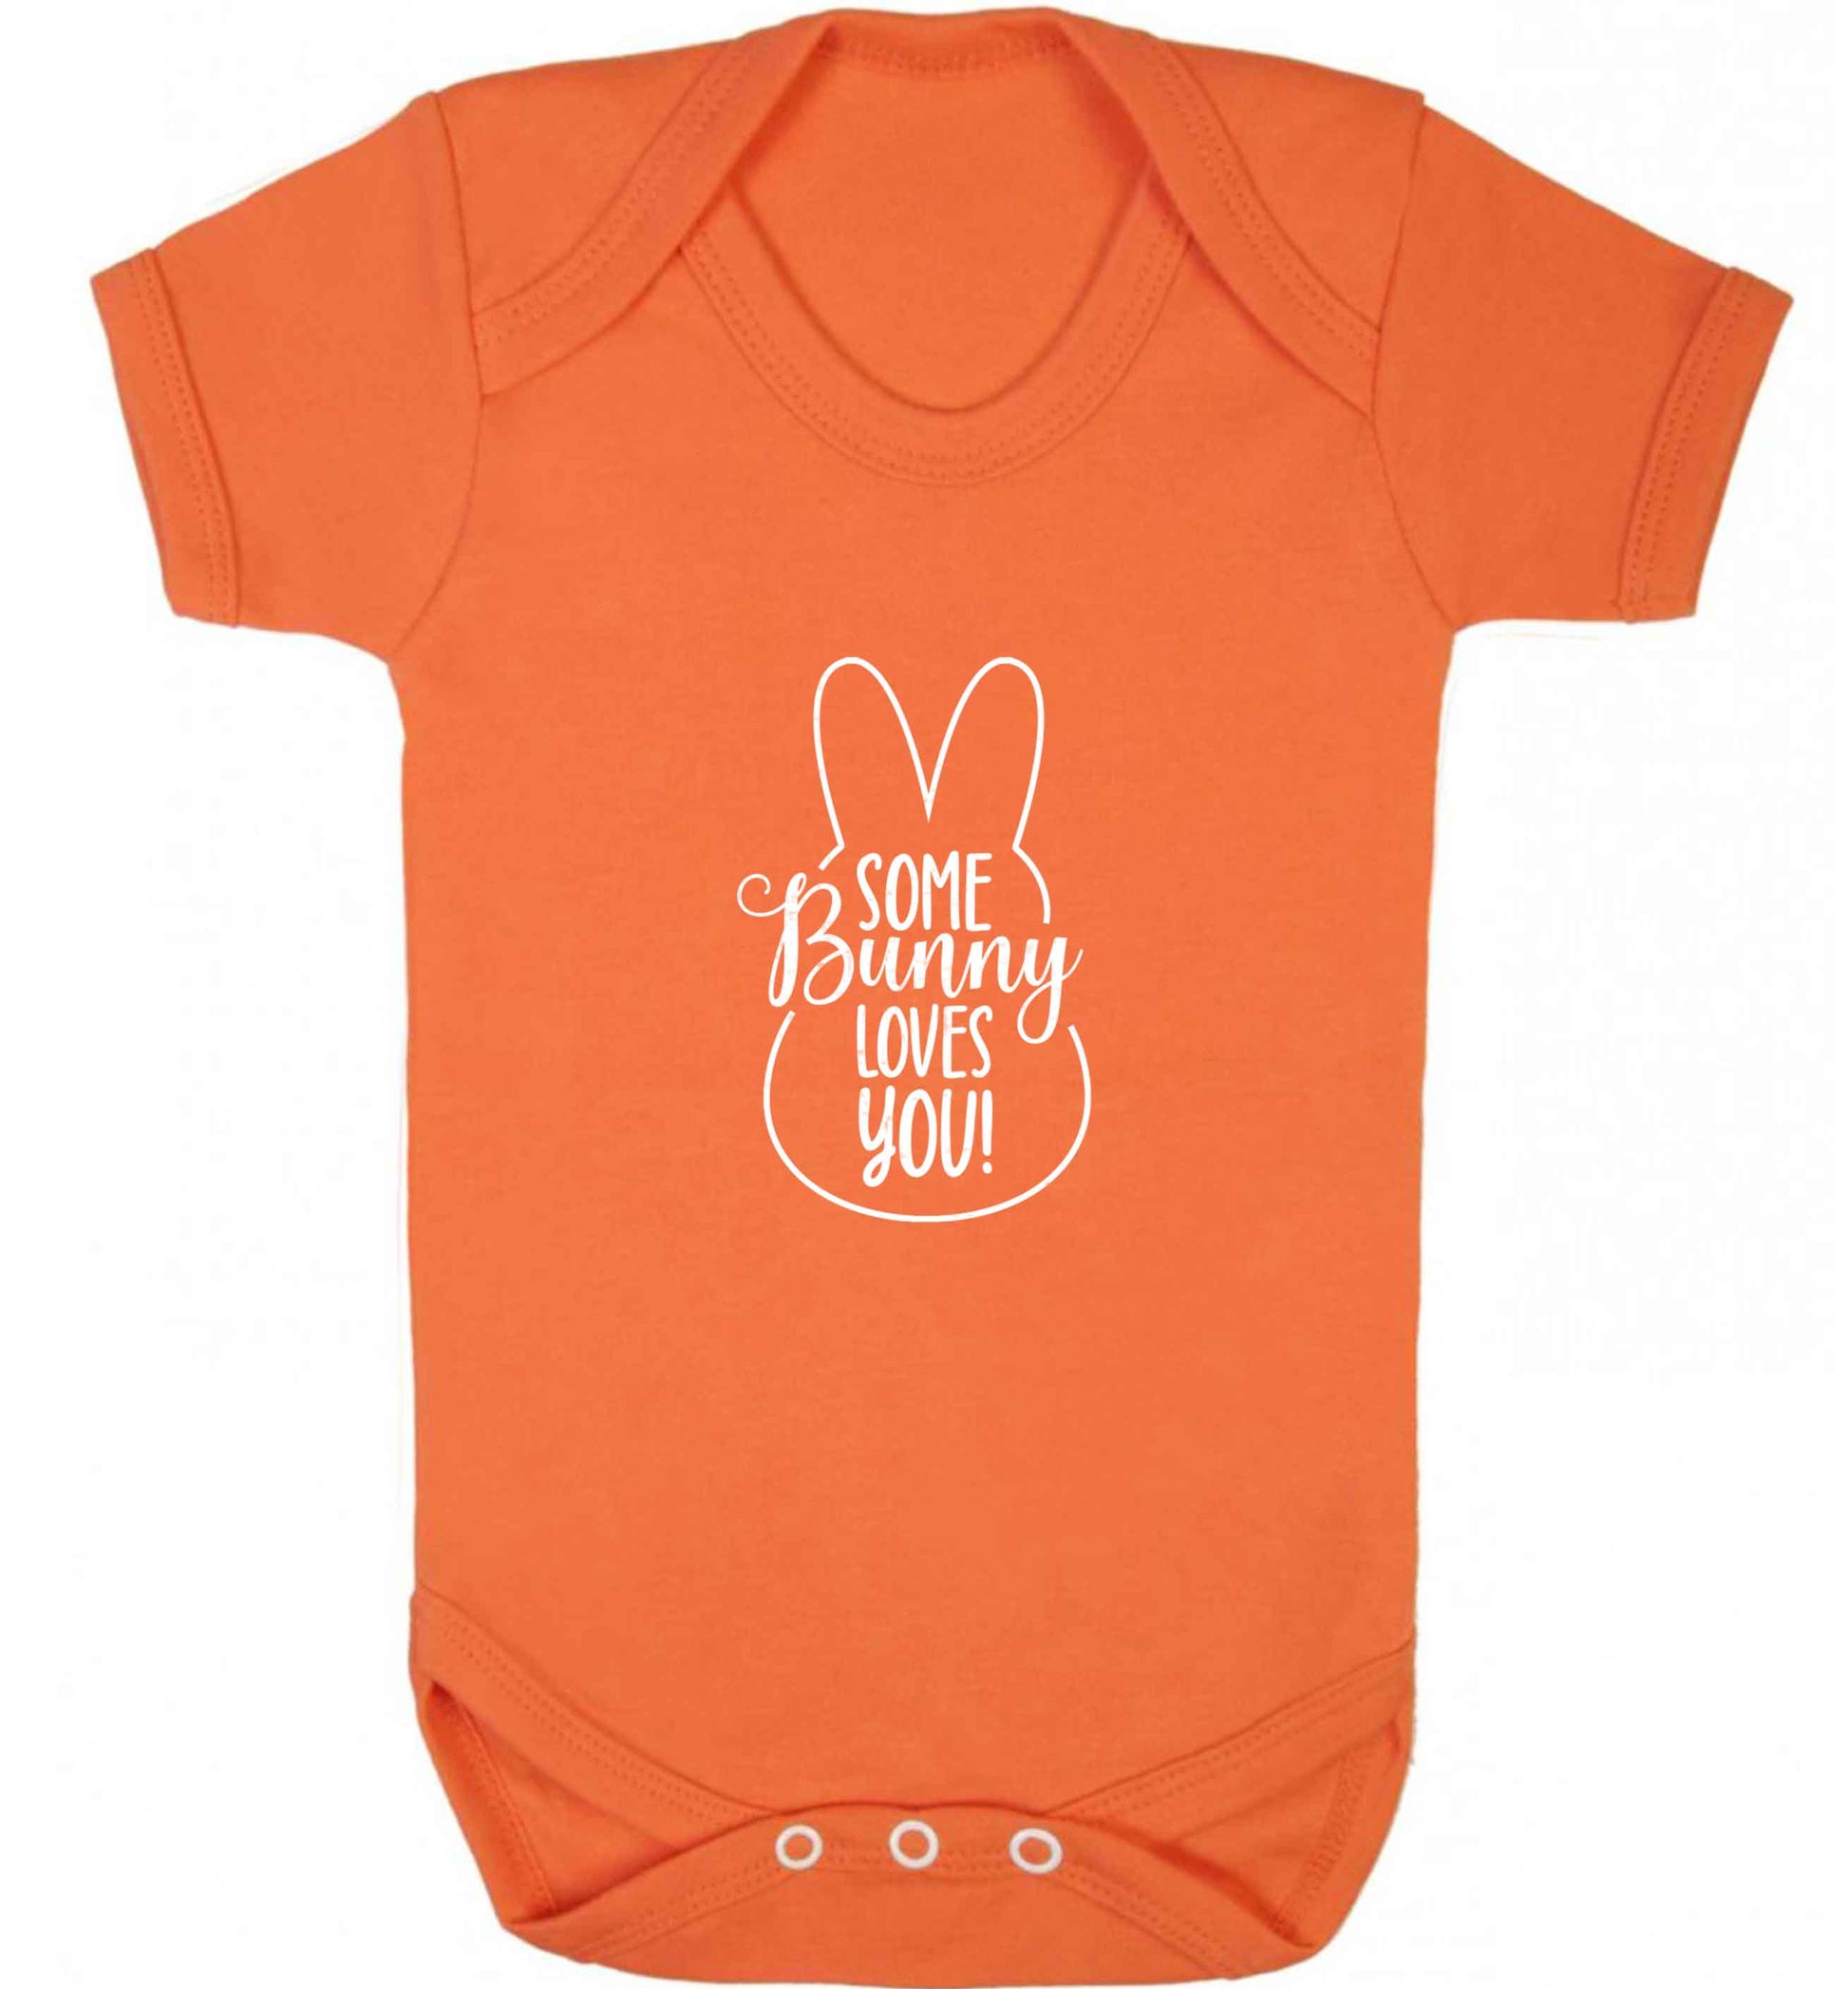 Some bunny loves you baby vest orange 18-24 months